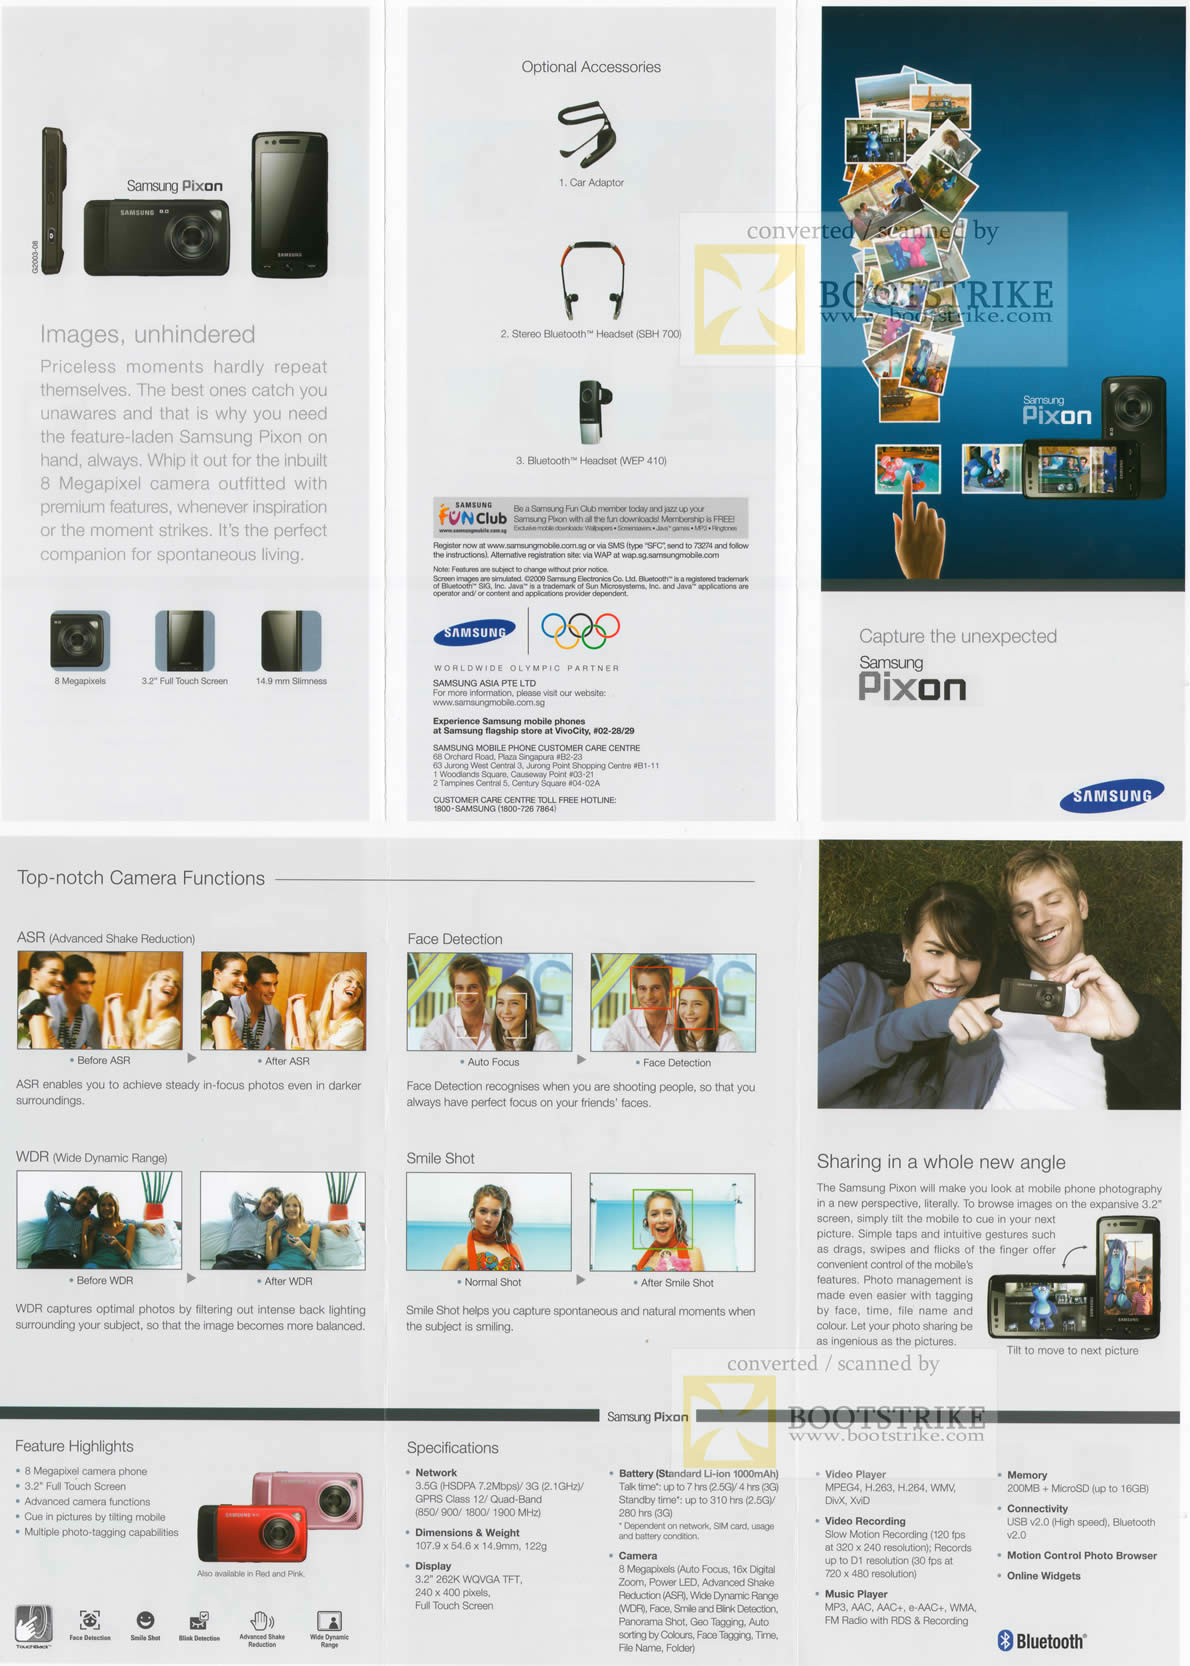 Sitex 2009 price list image brochure of Samsung Pixon Mobile Phone